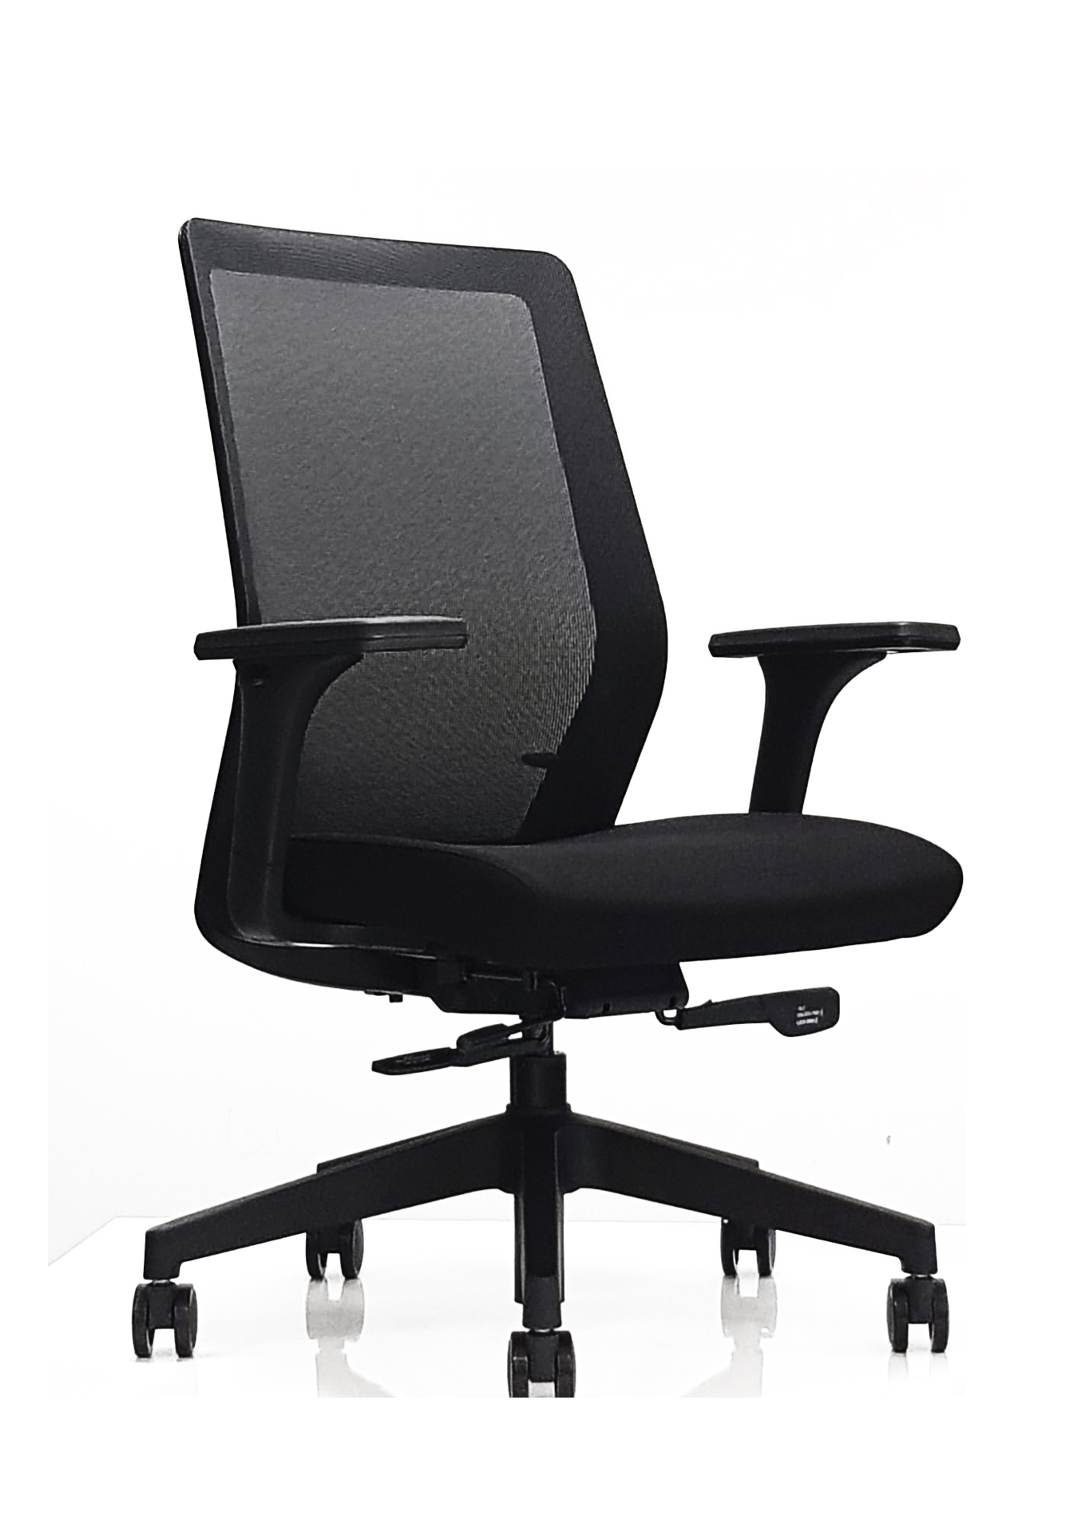 ergonomic chairs melbourne